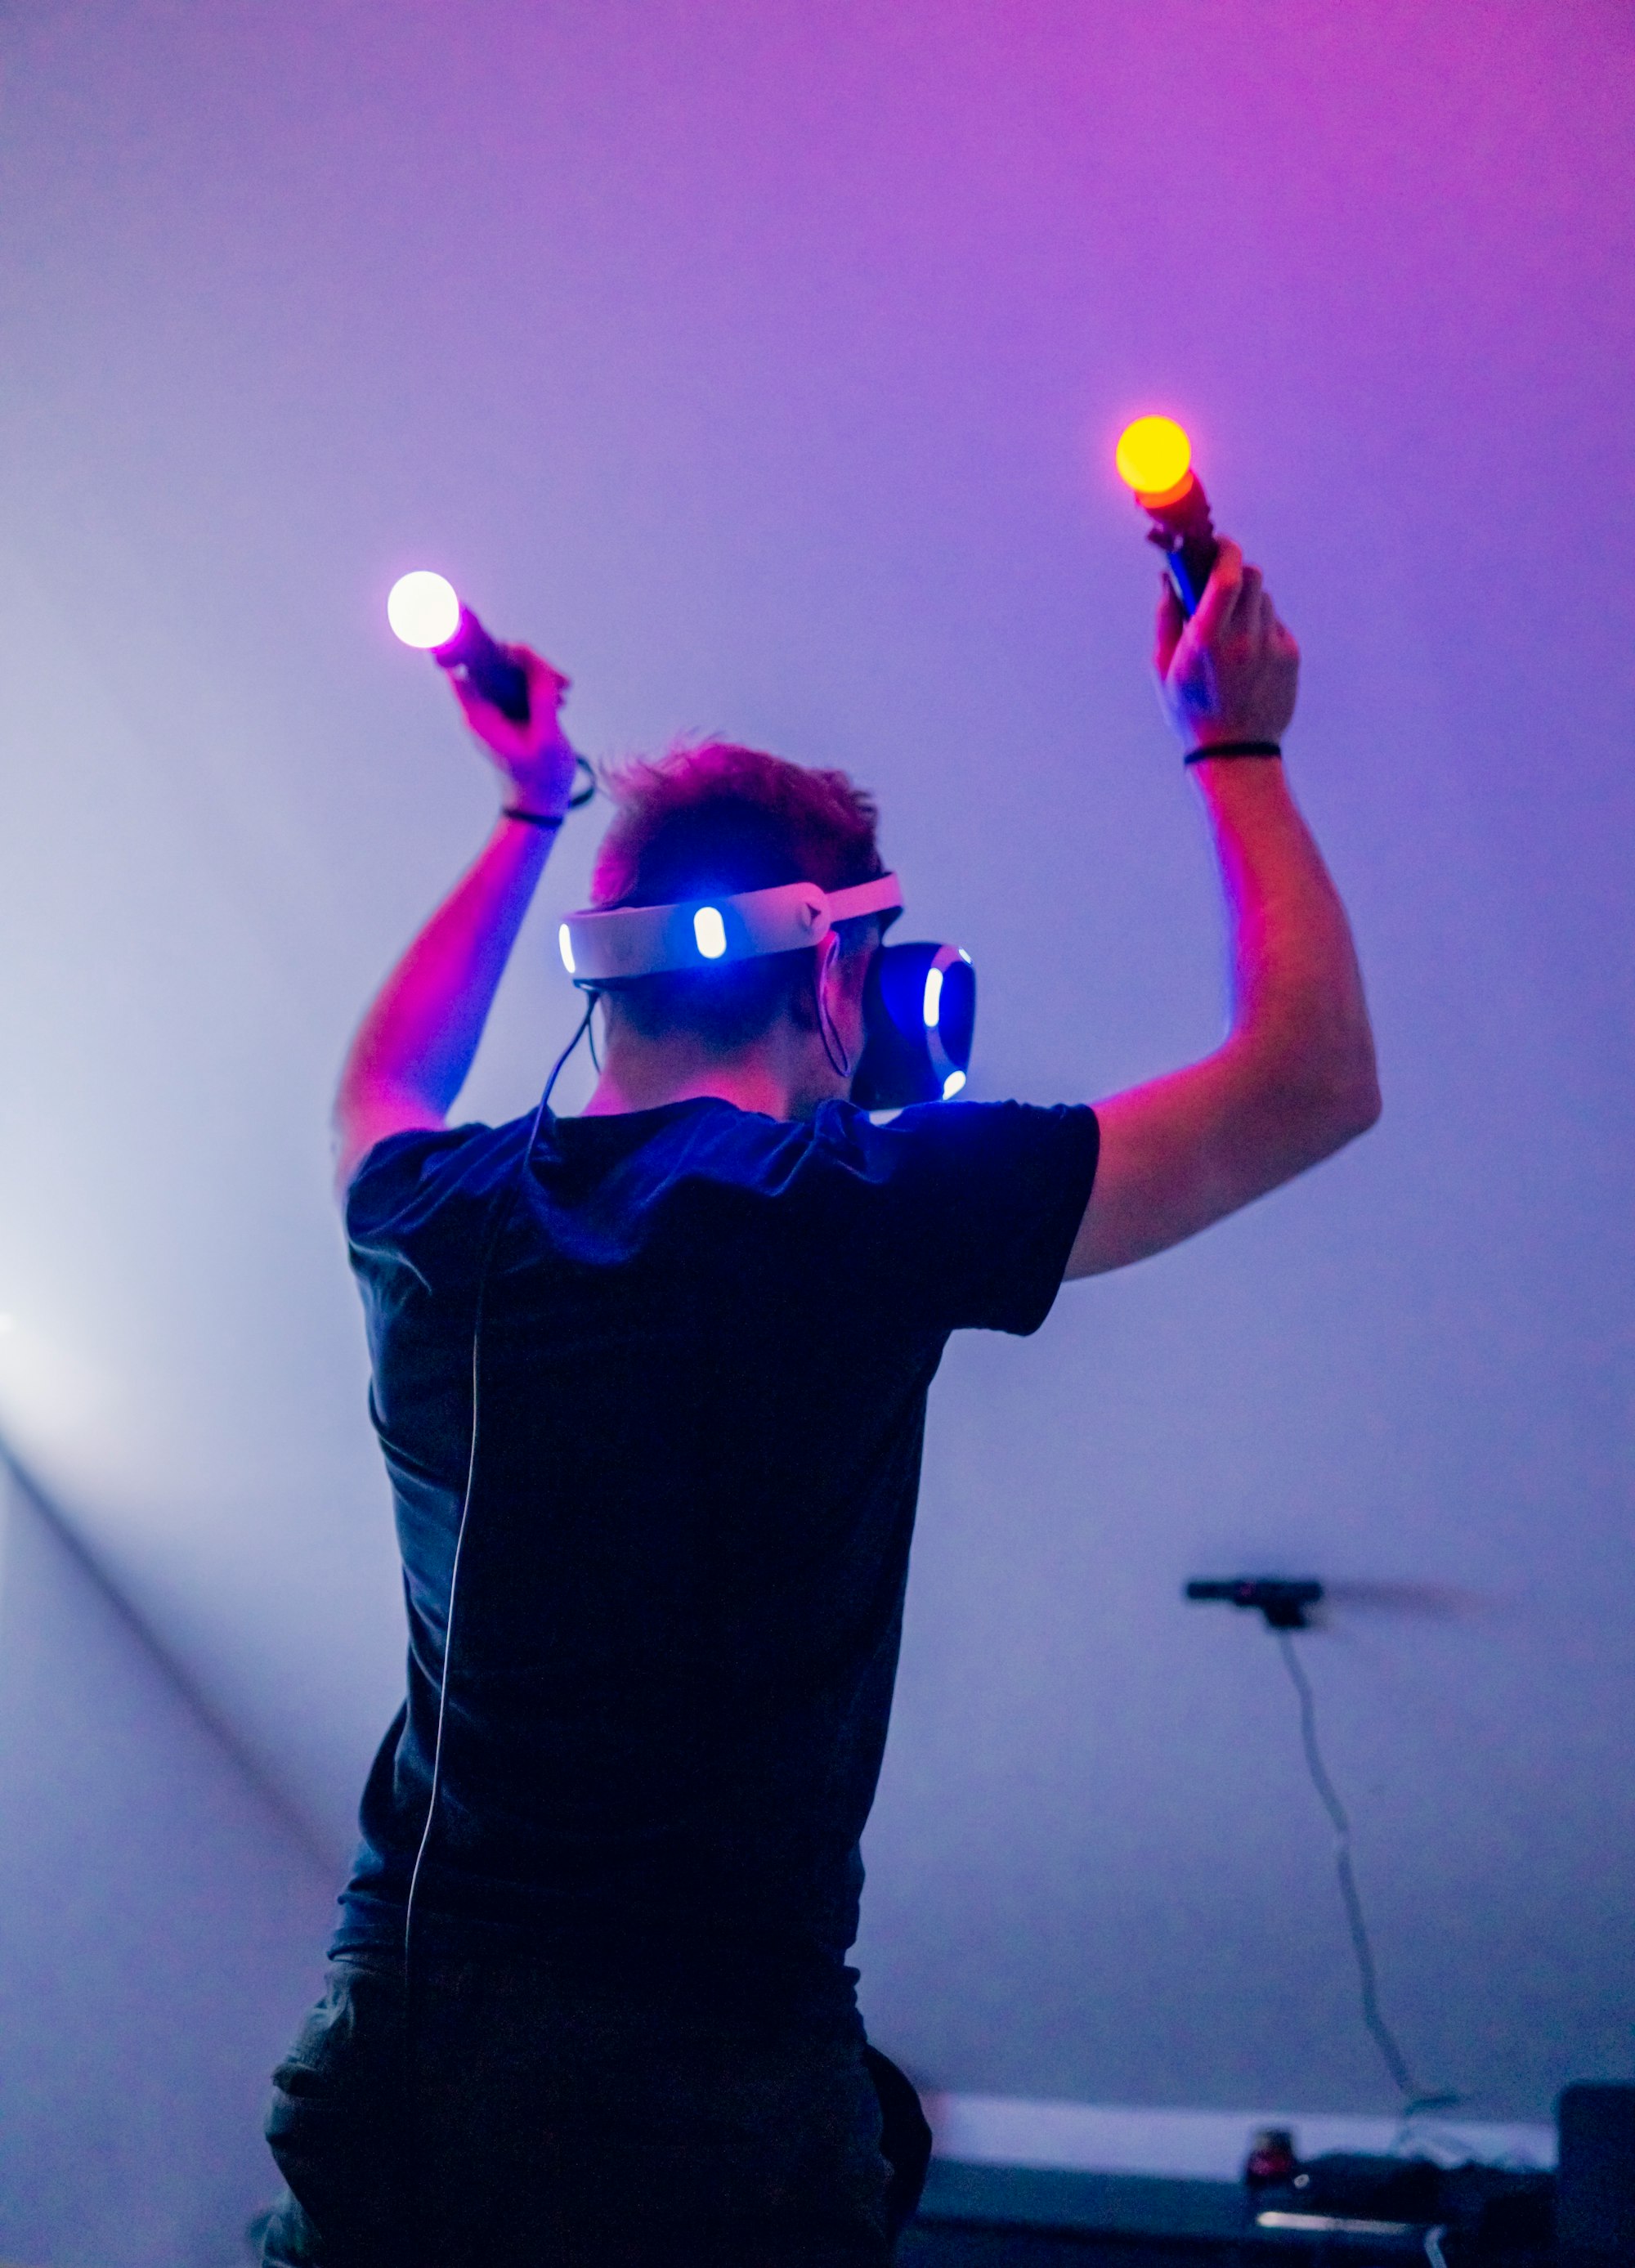 Guy playing Beatsaber on Playstation VR